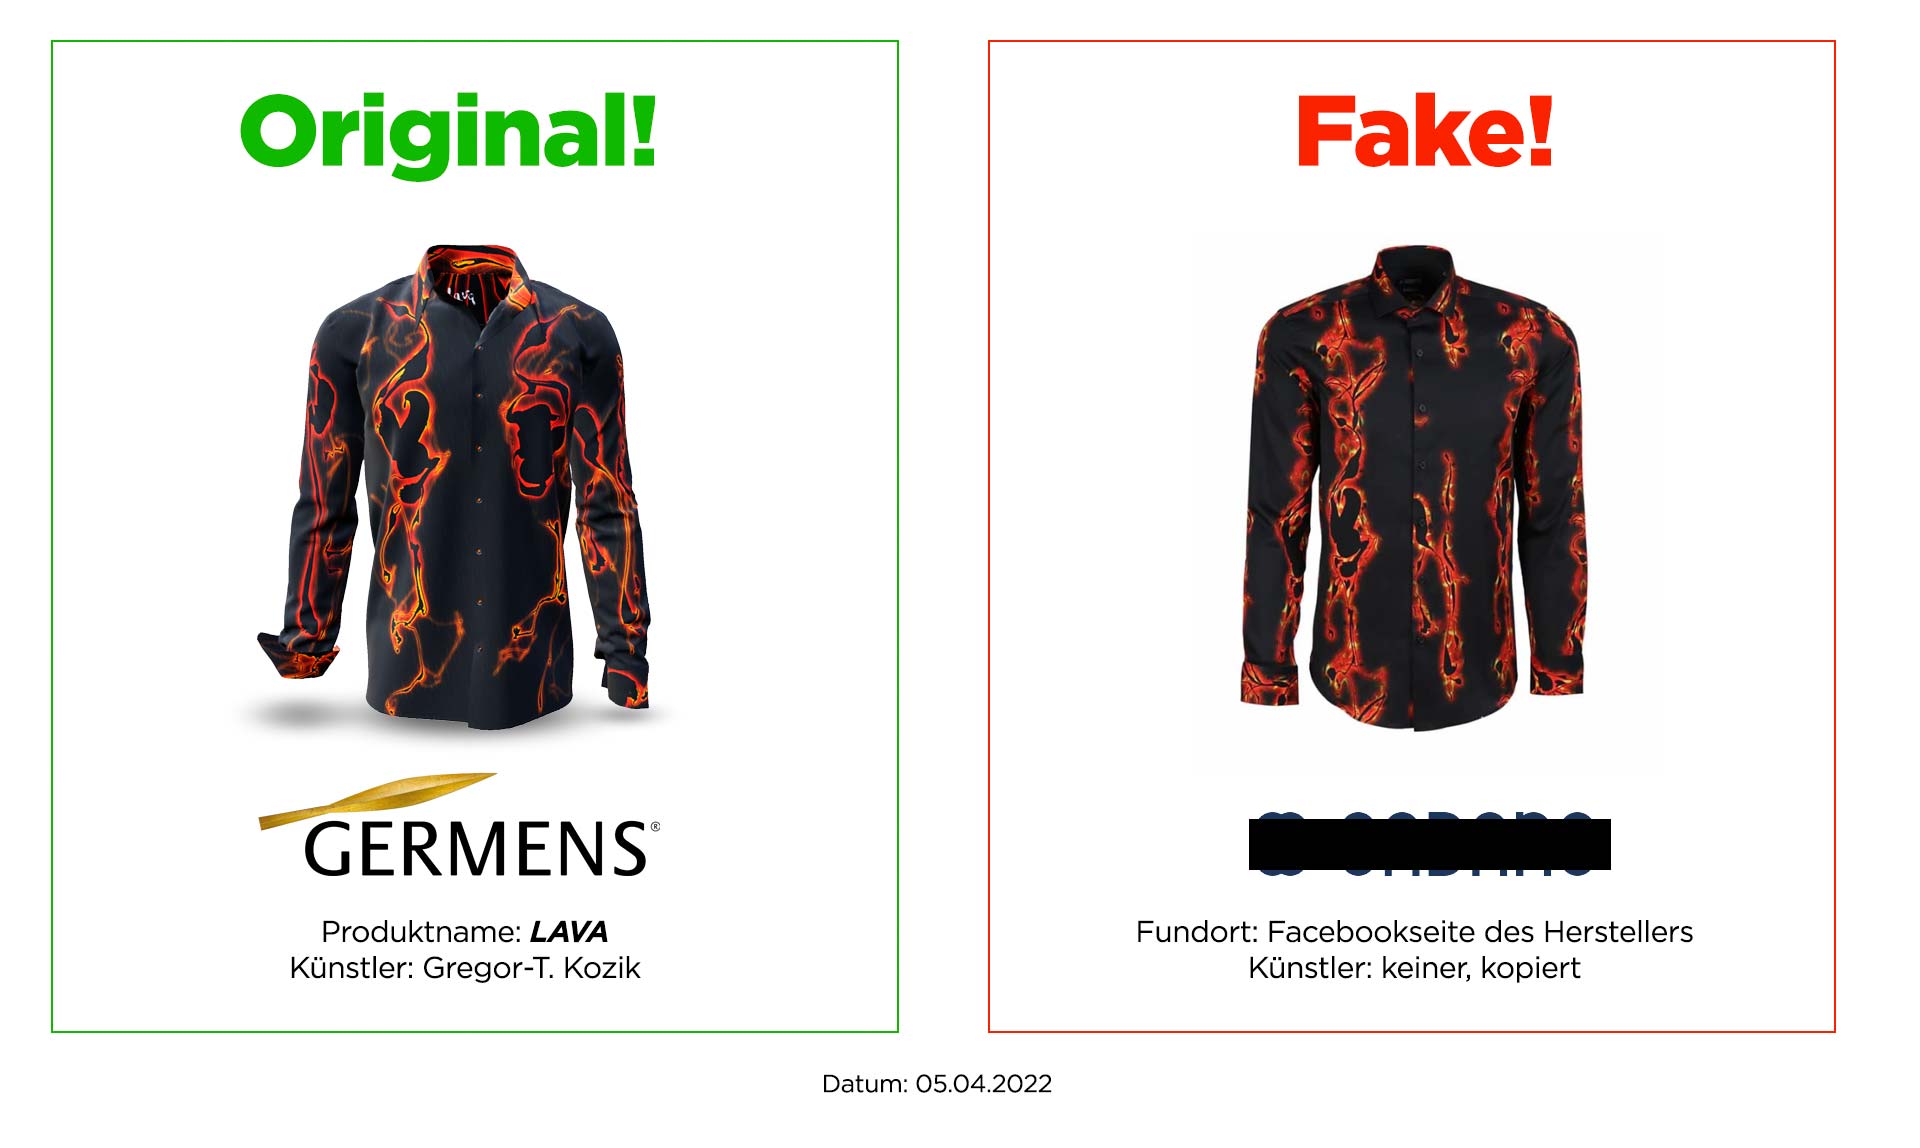 Original GERMENS® shirt LAVA and plagiarism